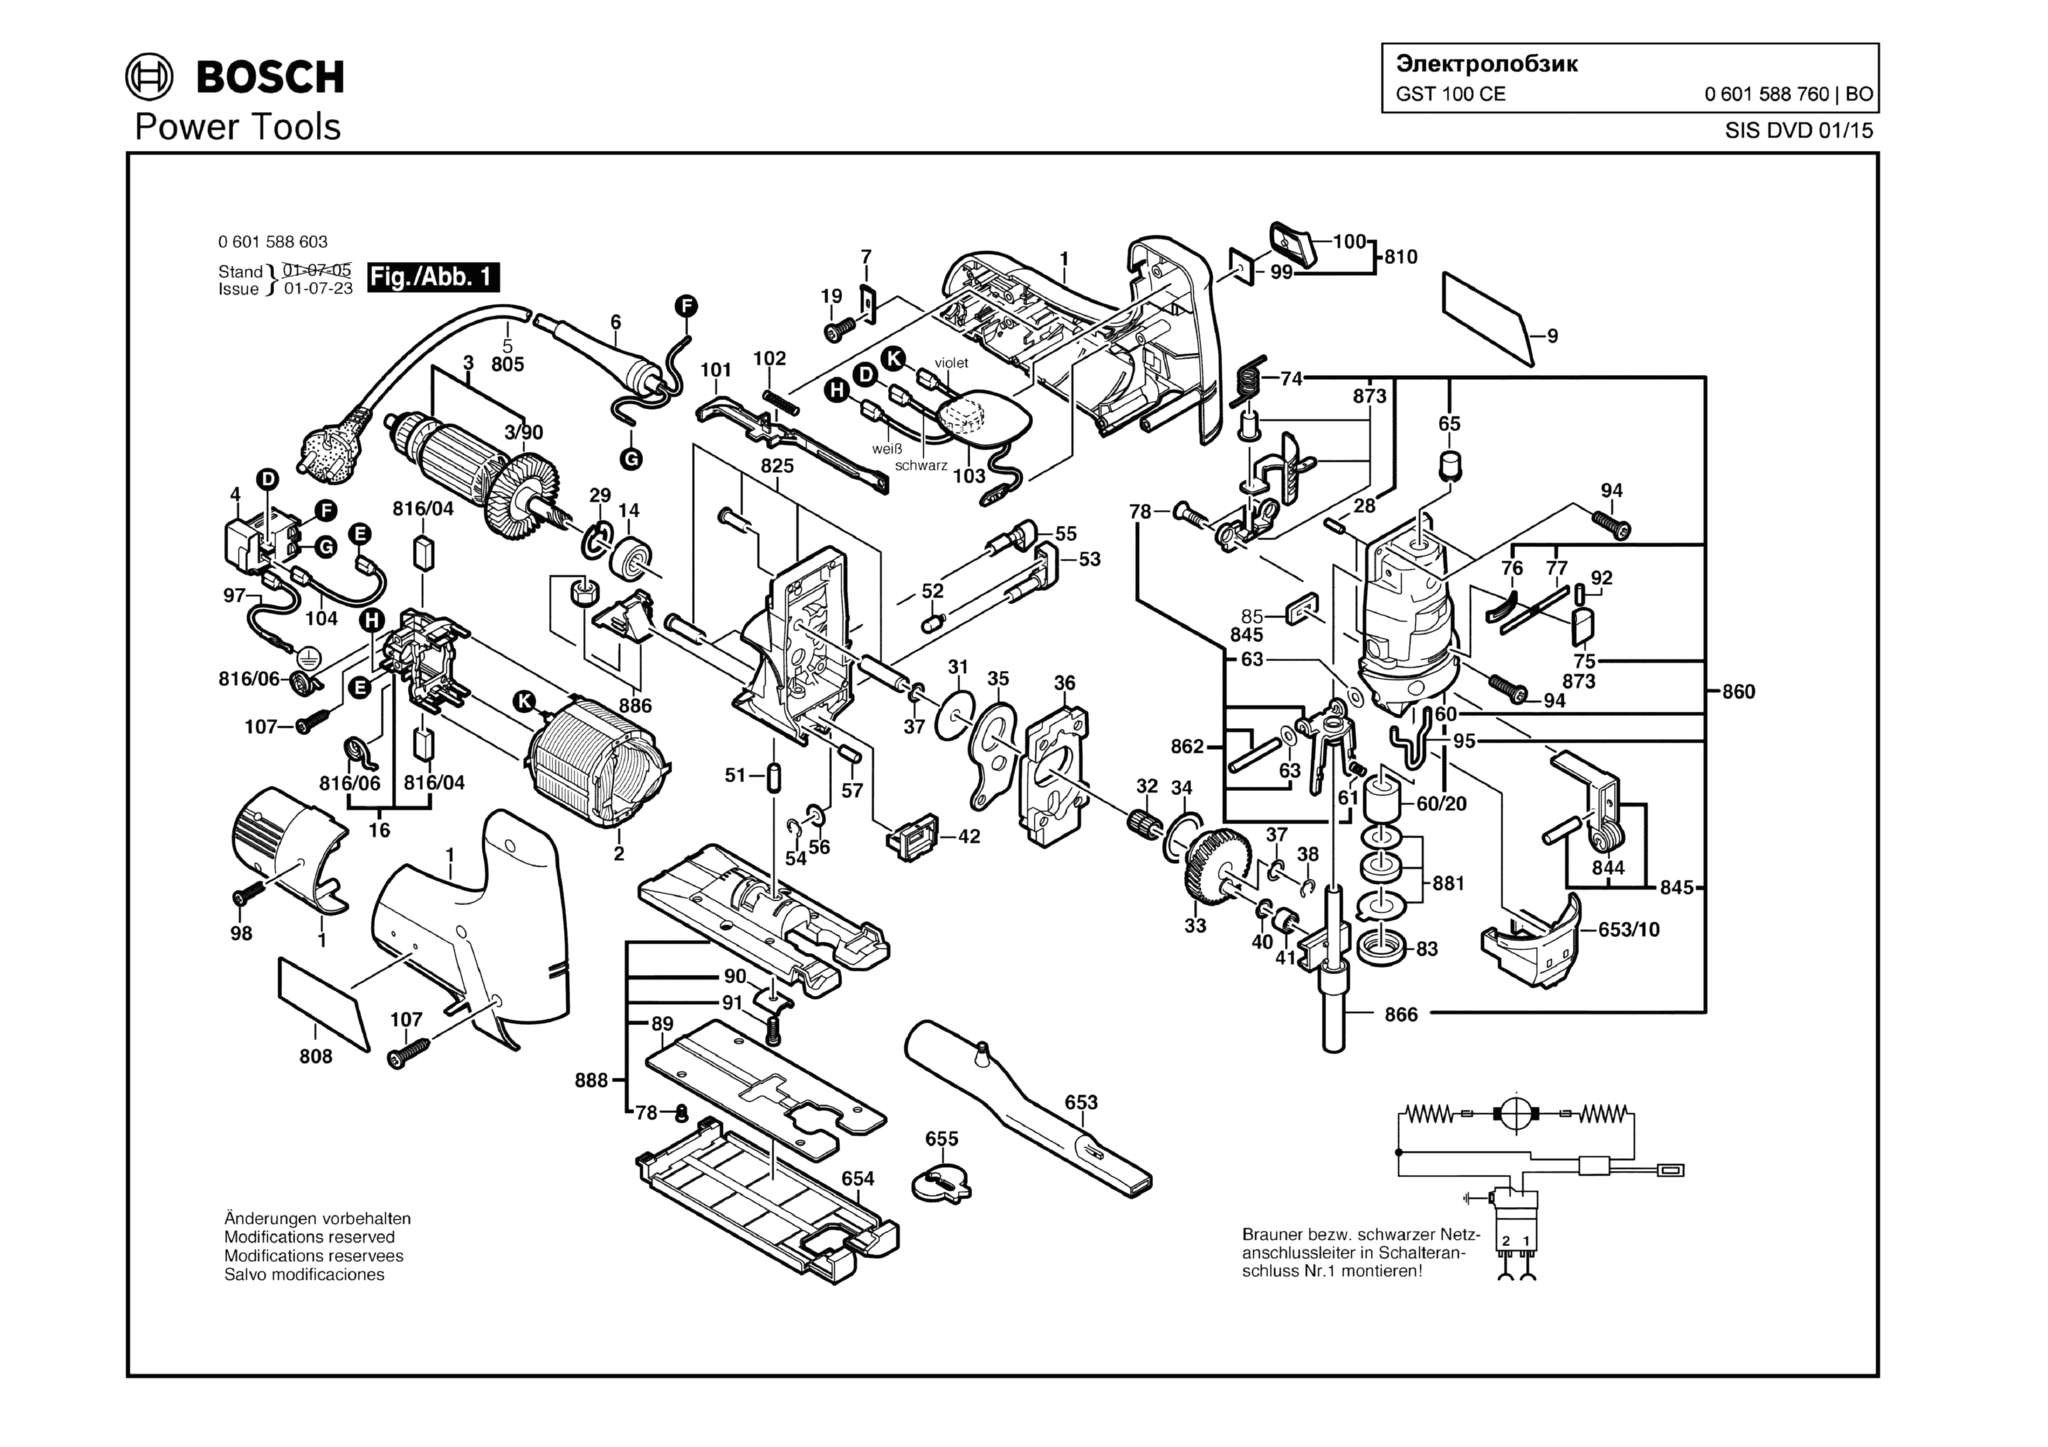 Запчасти, схема и деталировка Bosch GST 100 CE (ТИП 0601588760)